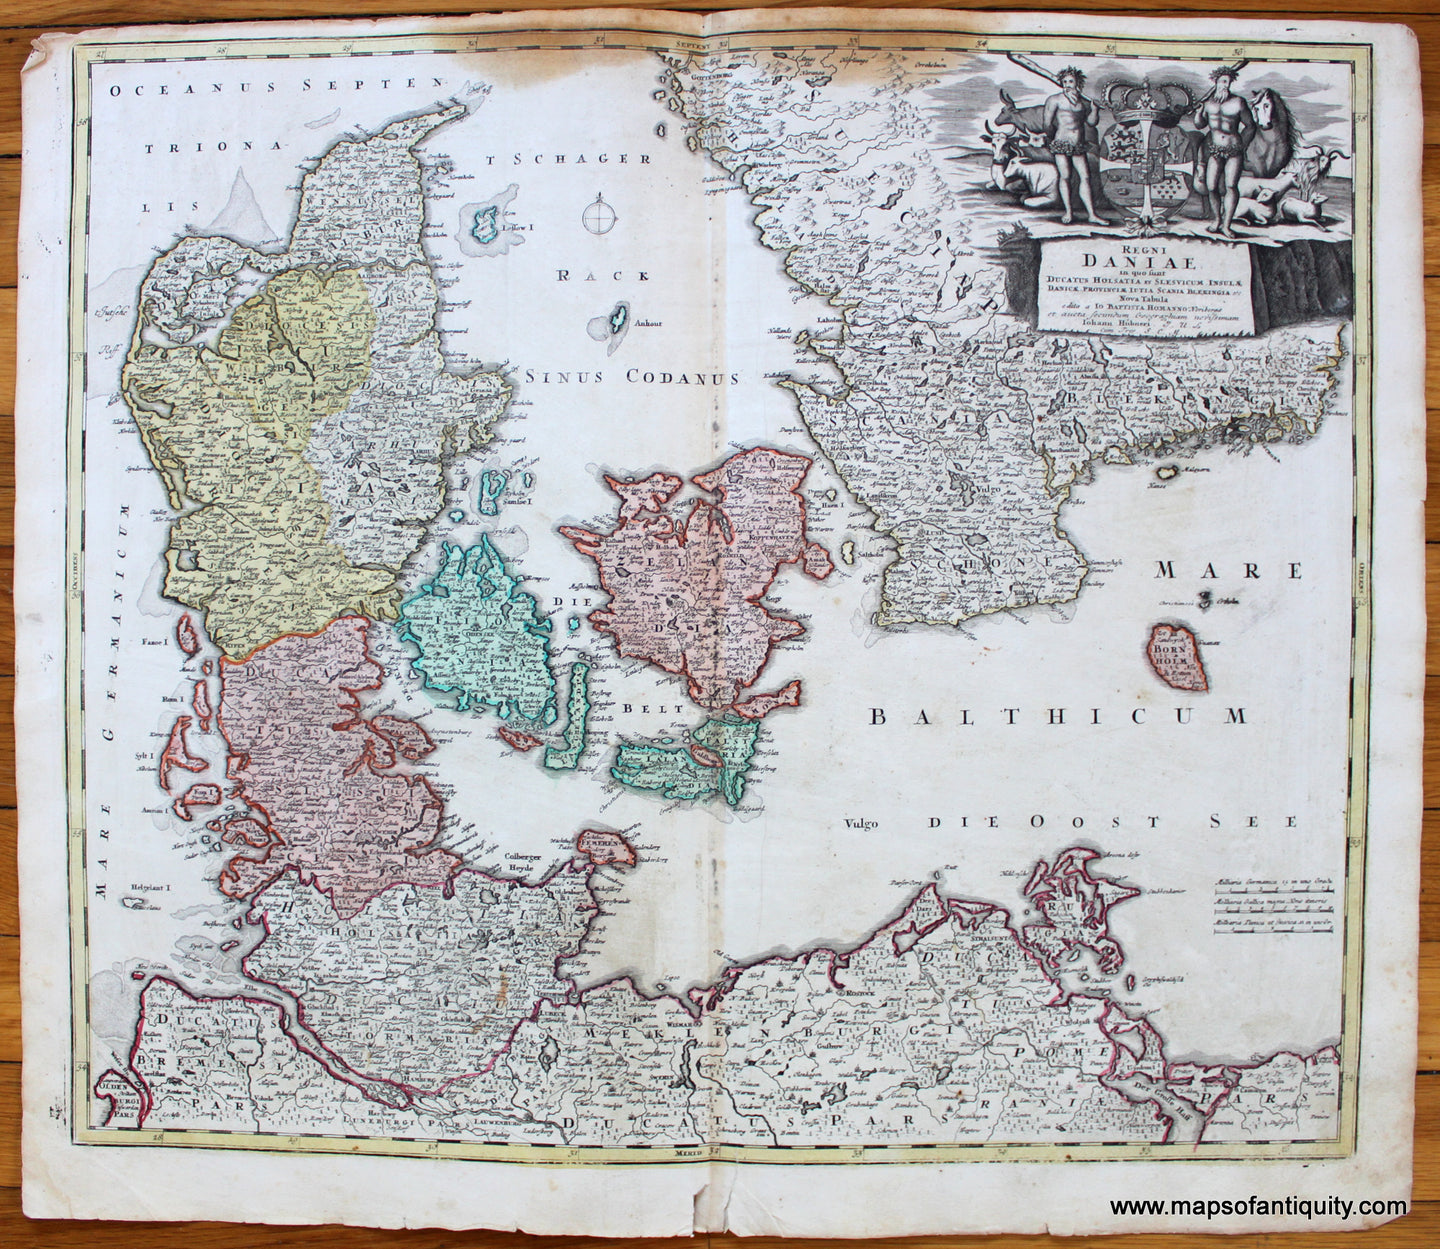 Antique-Hand-Colored-Map-Regni-Daniae-Europe-Scandinavia-Denmark-&-Iceland-c.-1740-Homann-Maps-Of-Antiquity